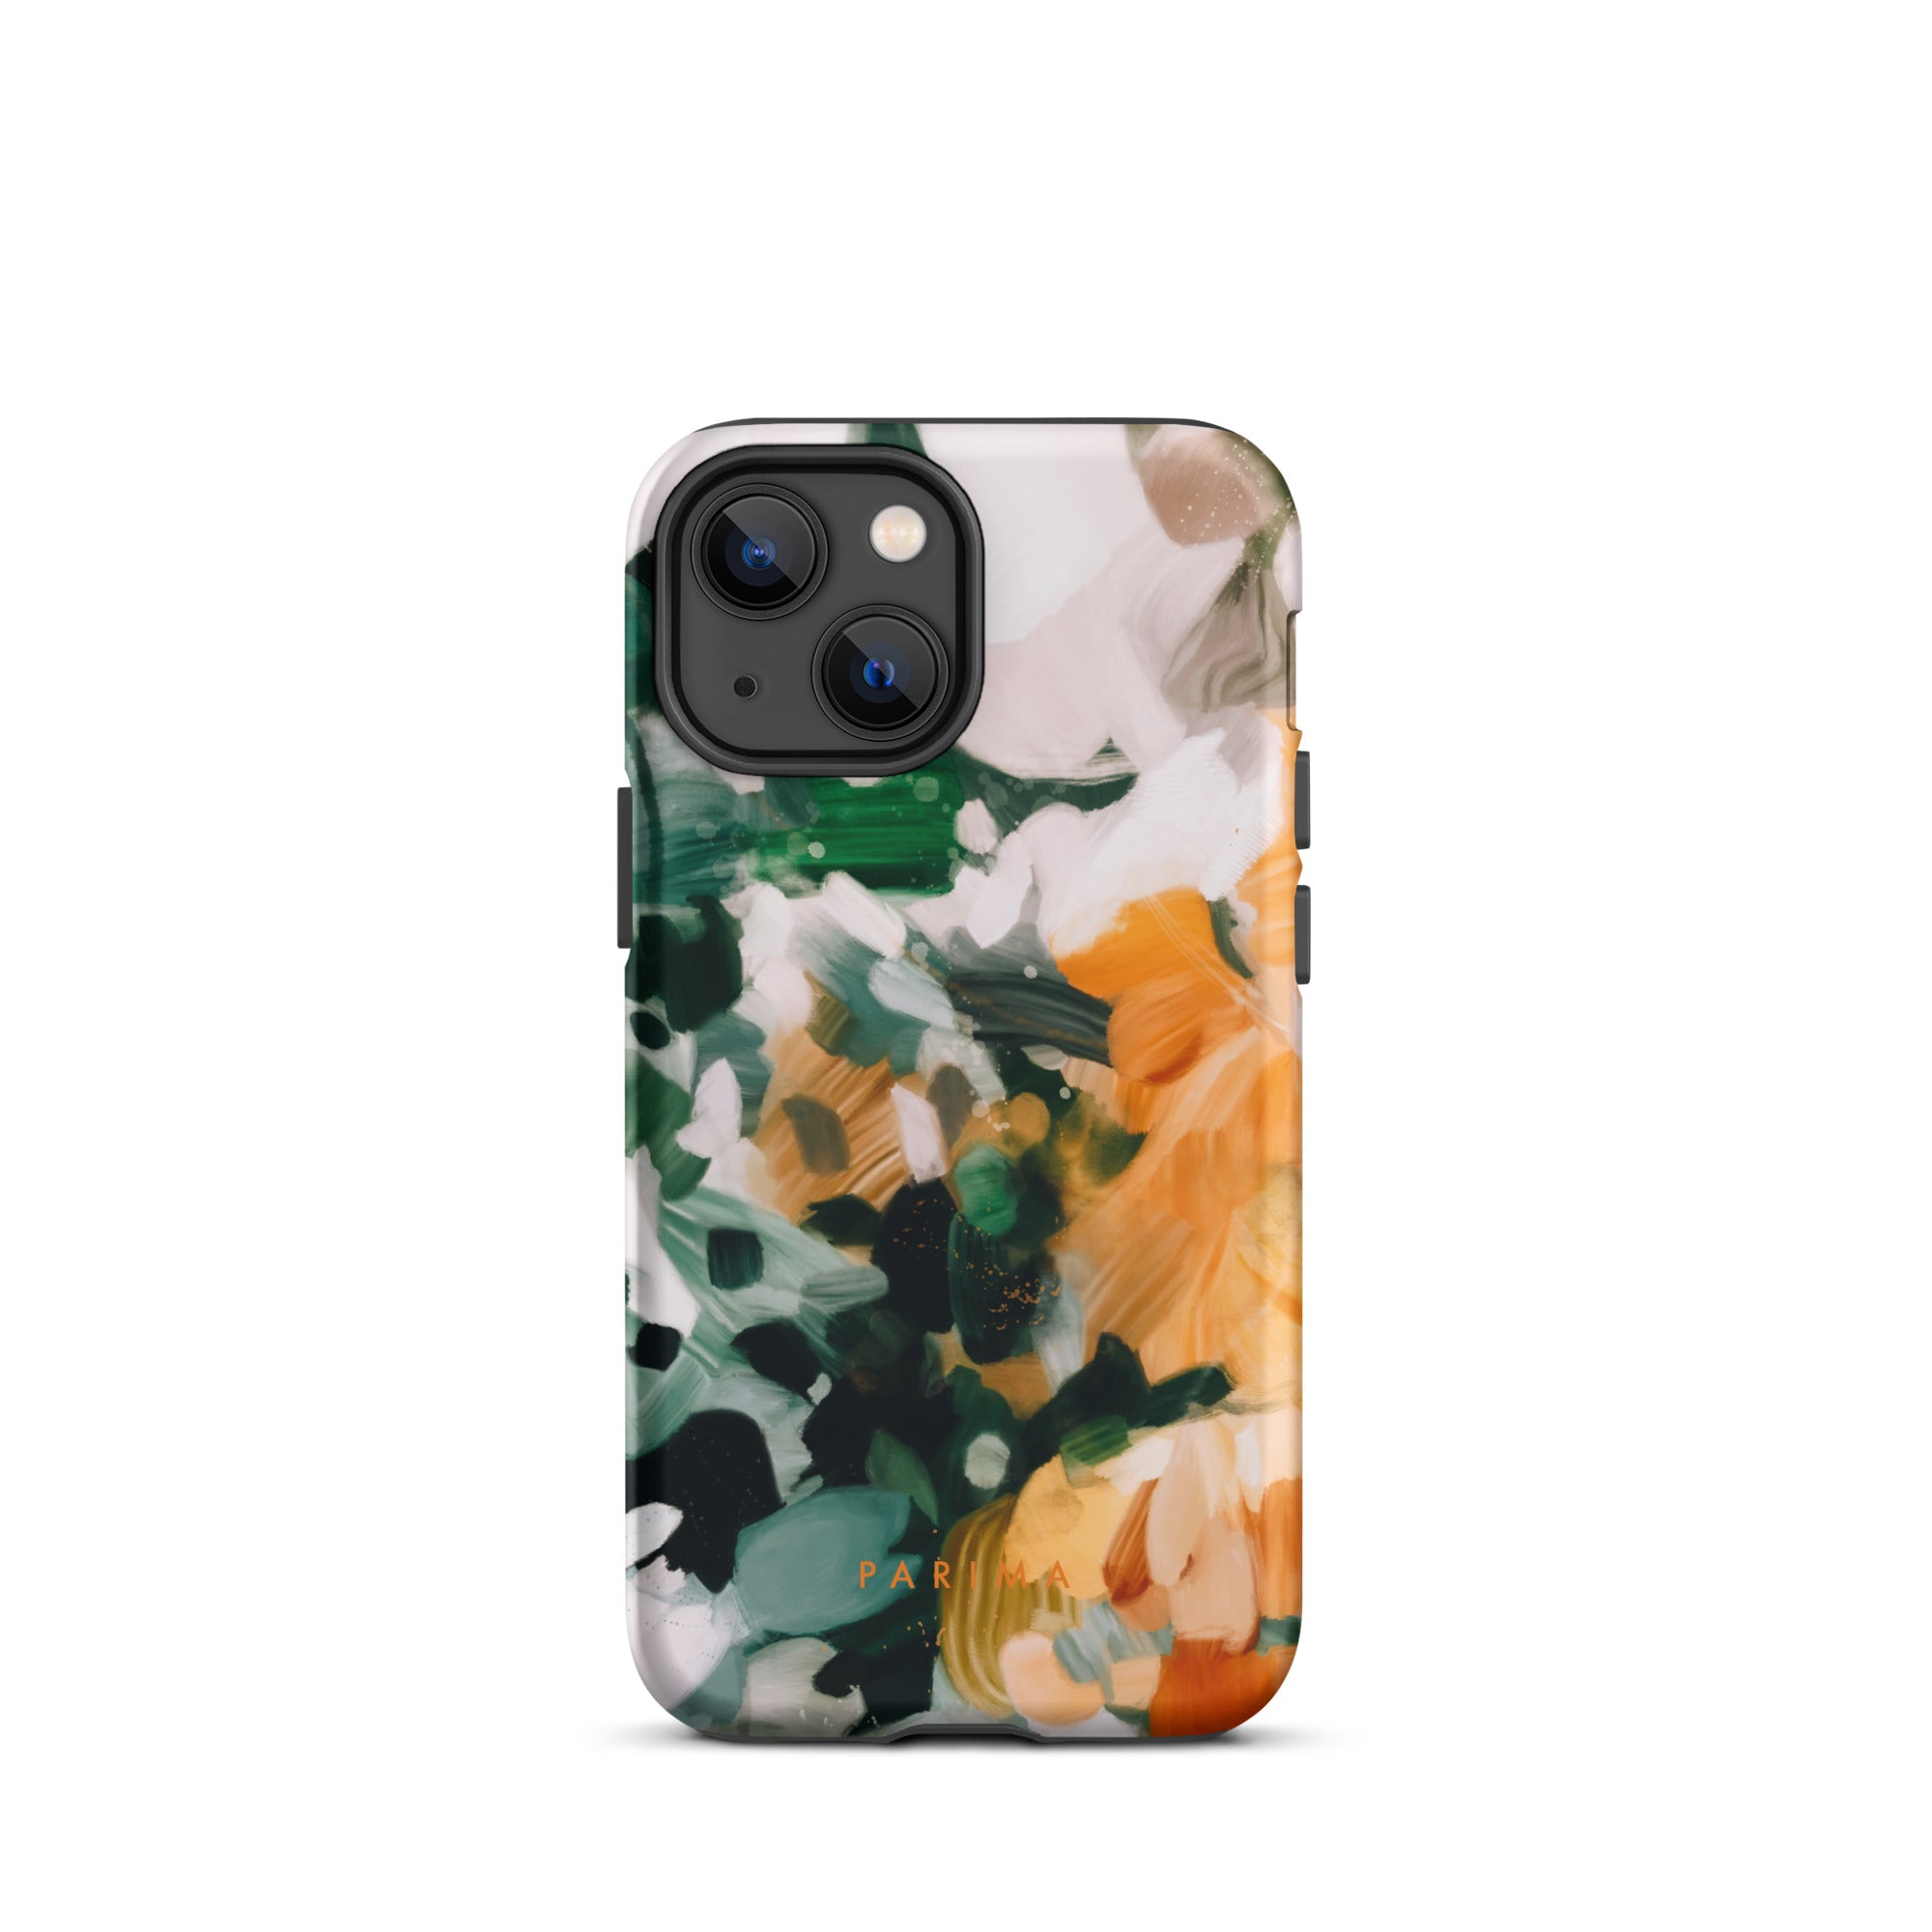 Aspen, green and orange abstract art - iPhone 13 Mini tough case by Parima Studio